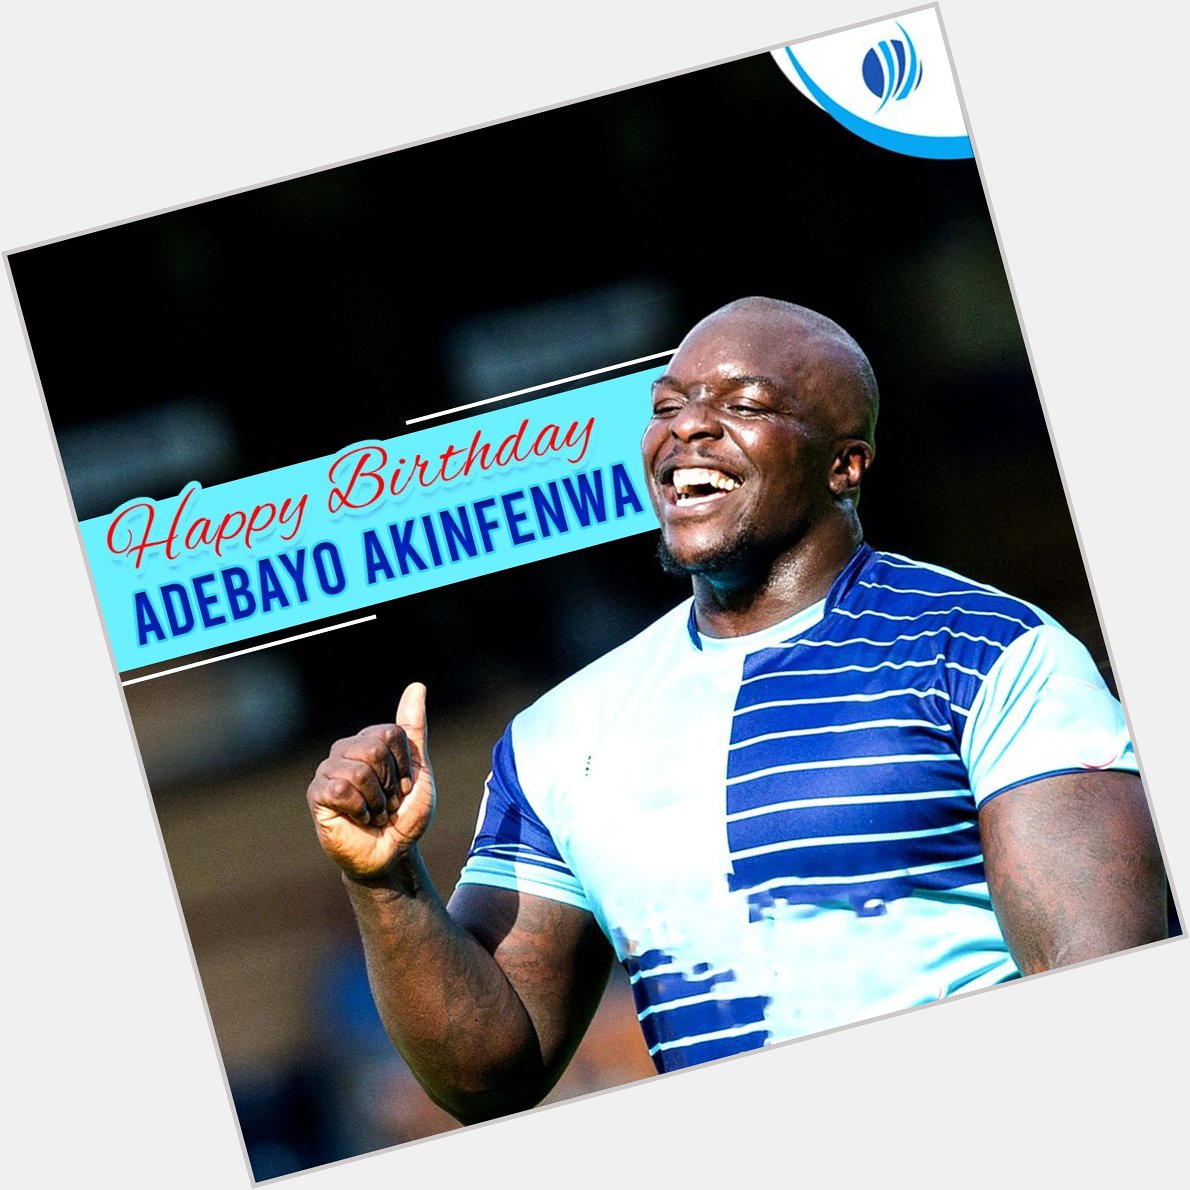 Happy Birthday Adebayo Akinfenwa the strongest footballer in the world.    